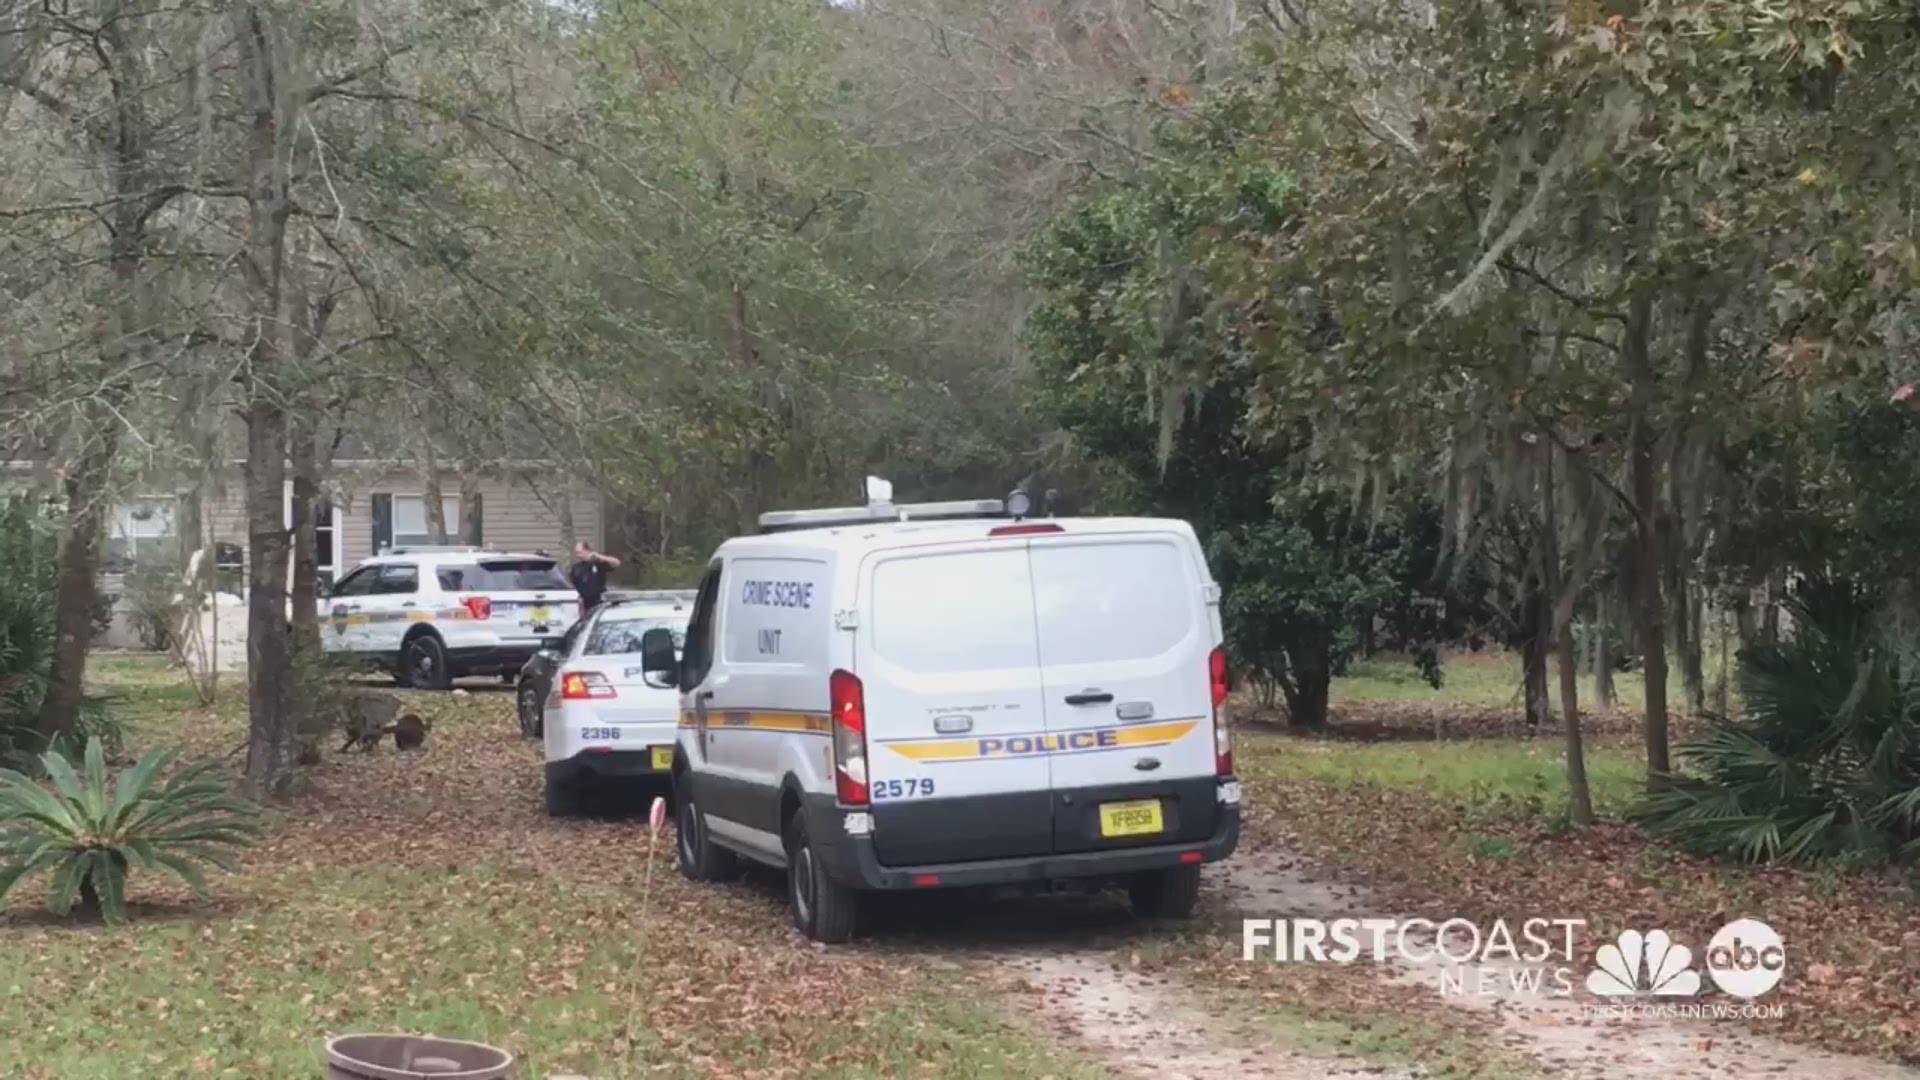 Several homes were burglarized near Denton Road, according the Jacksonville Sheriff's Office.